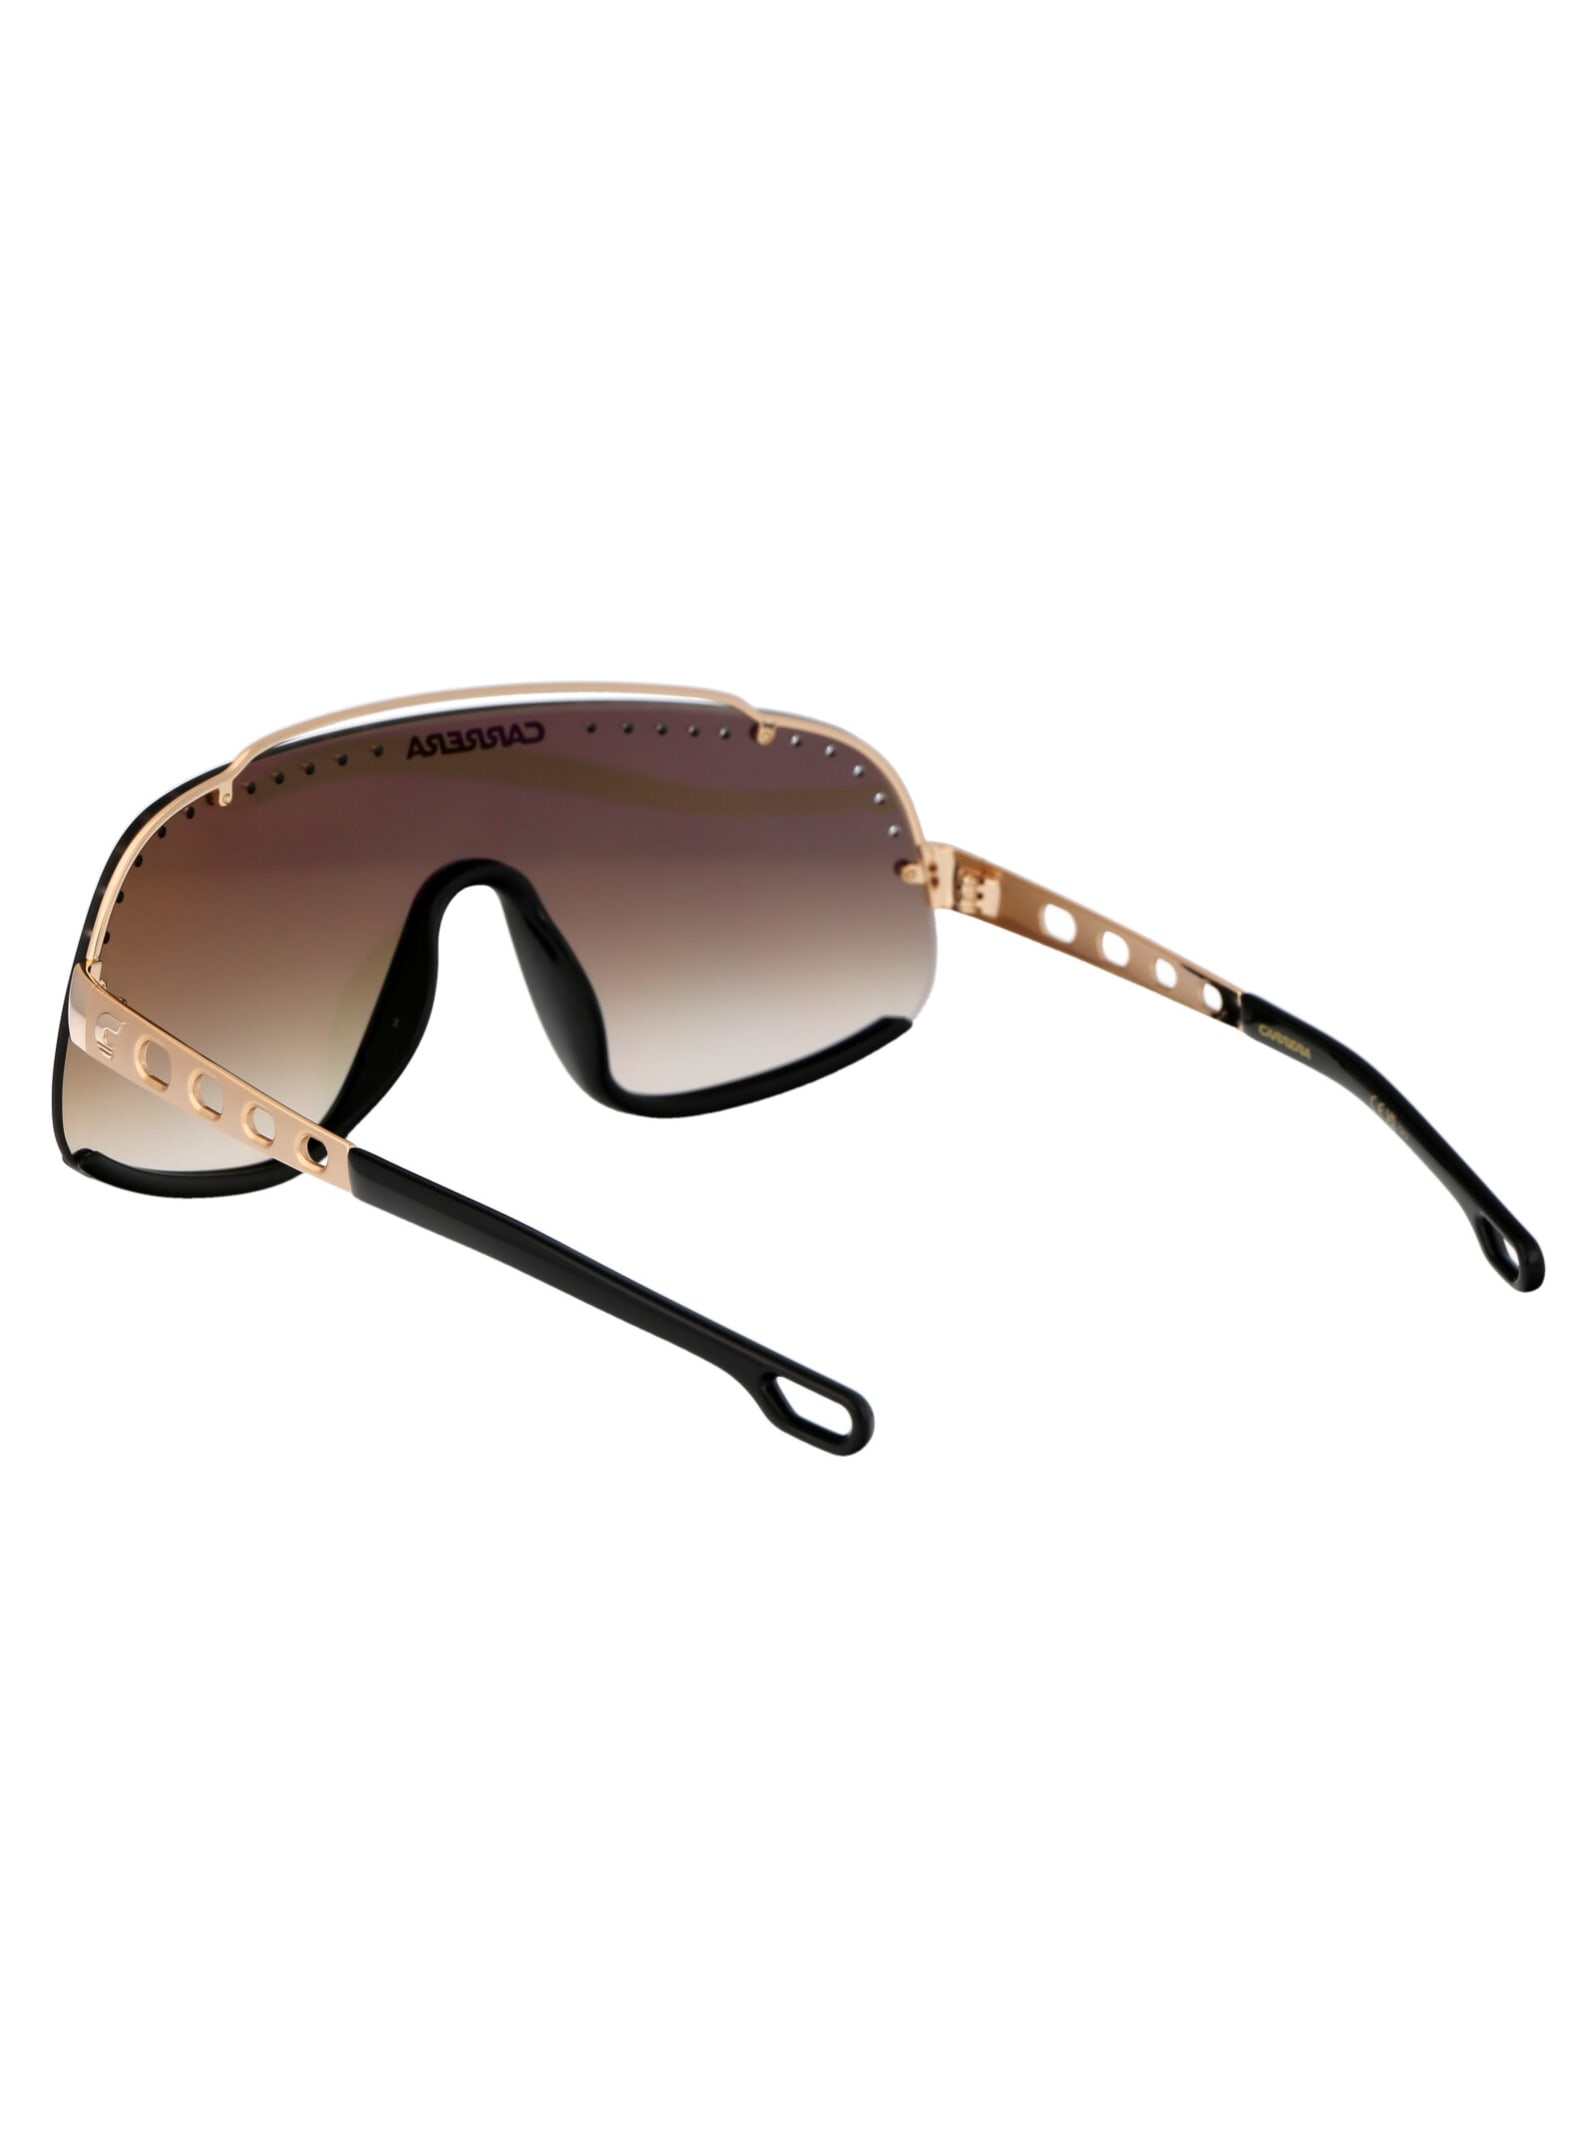 Shop Carrera Flaglab 16 Sunglasses In Fg486 Brwngold B